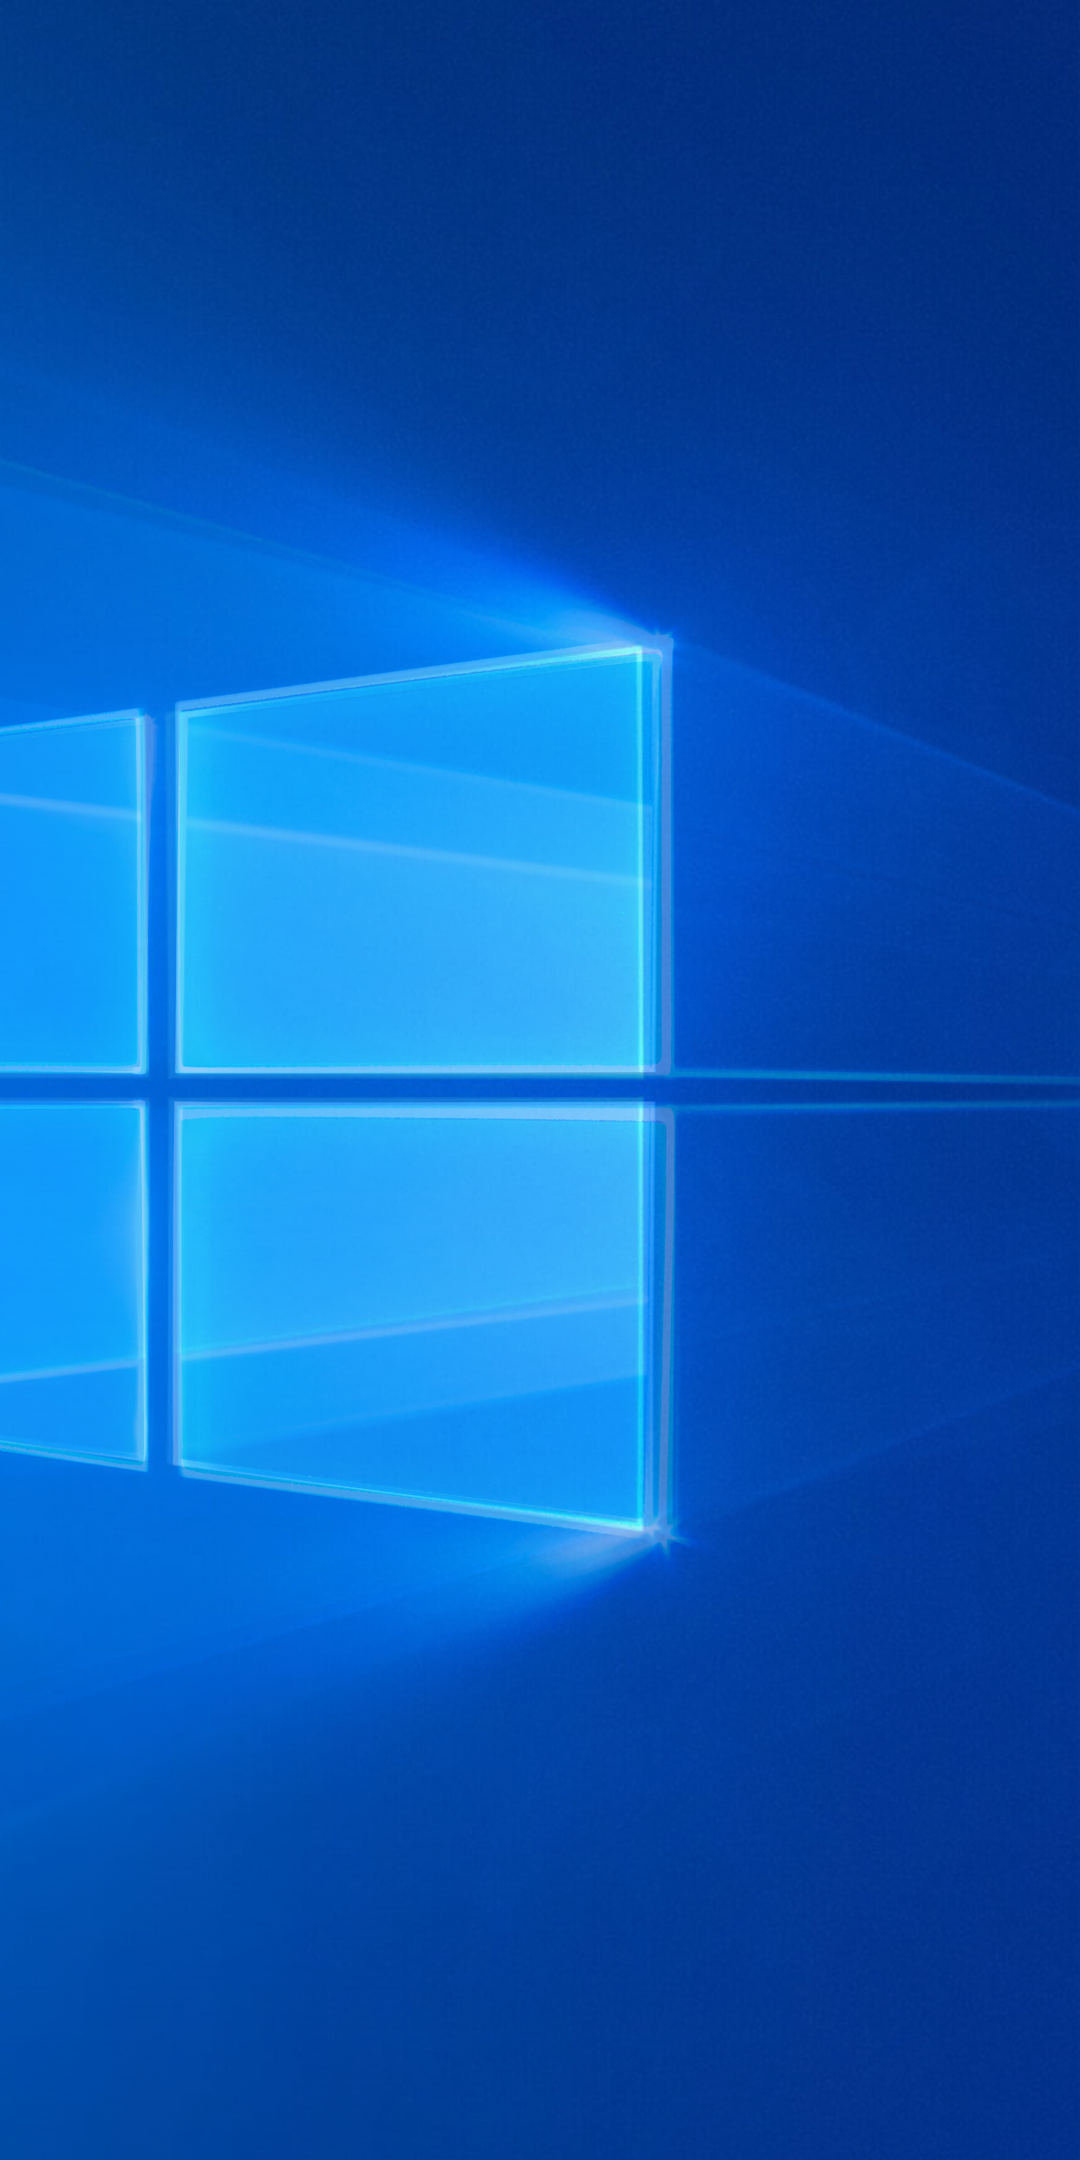 Windows 10 Wallpaper 4K, Windows logo, Glossy, Blue background